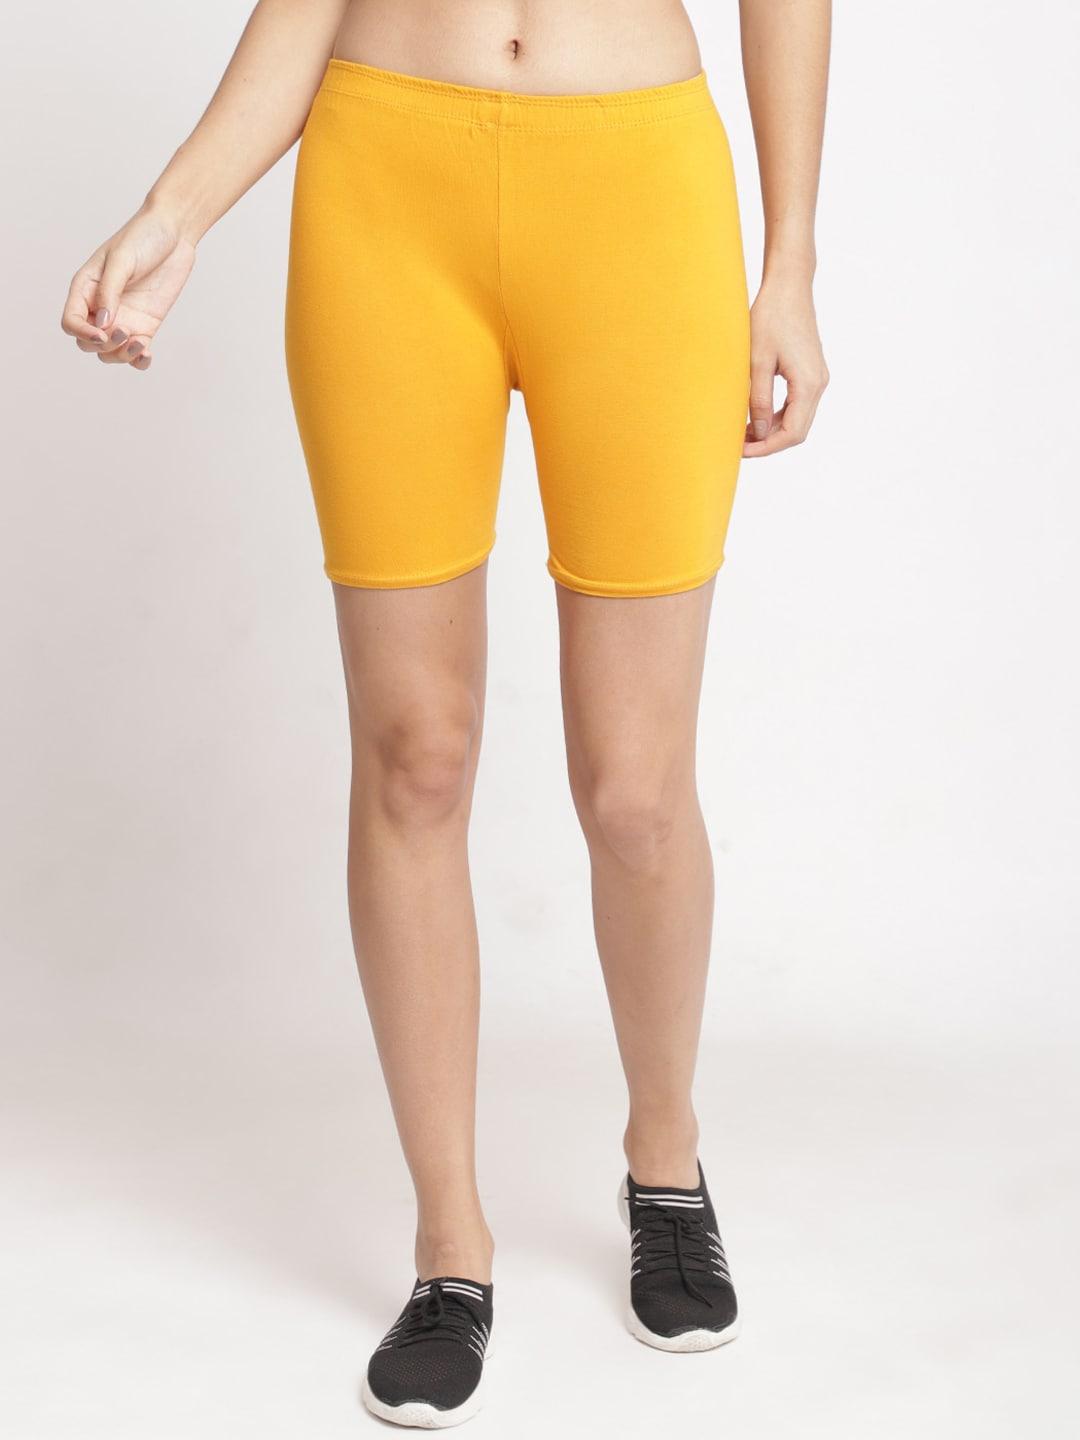 GRACIT Women Yellow Cycling Sports Shorts